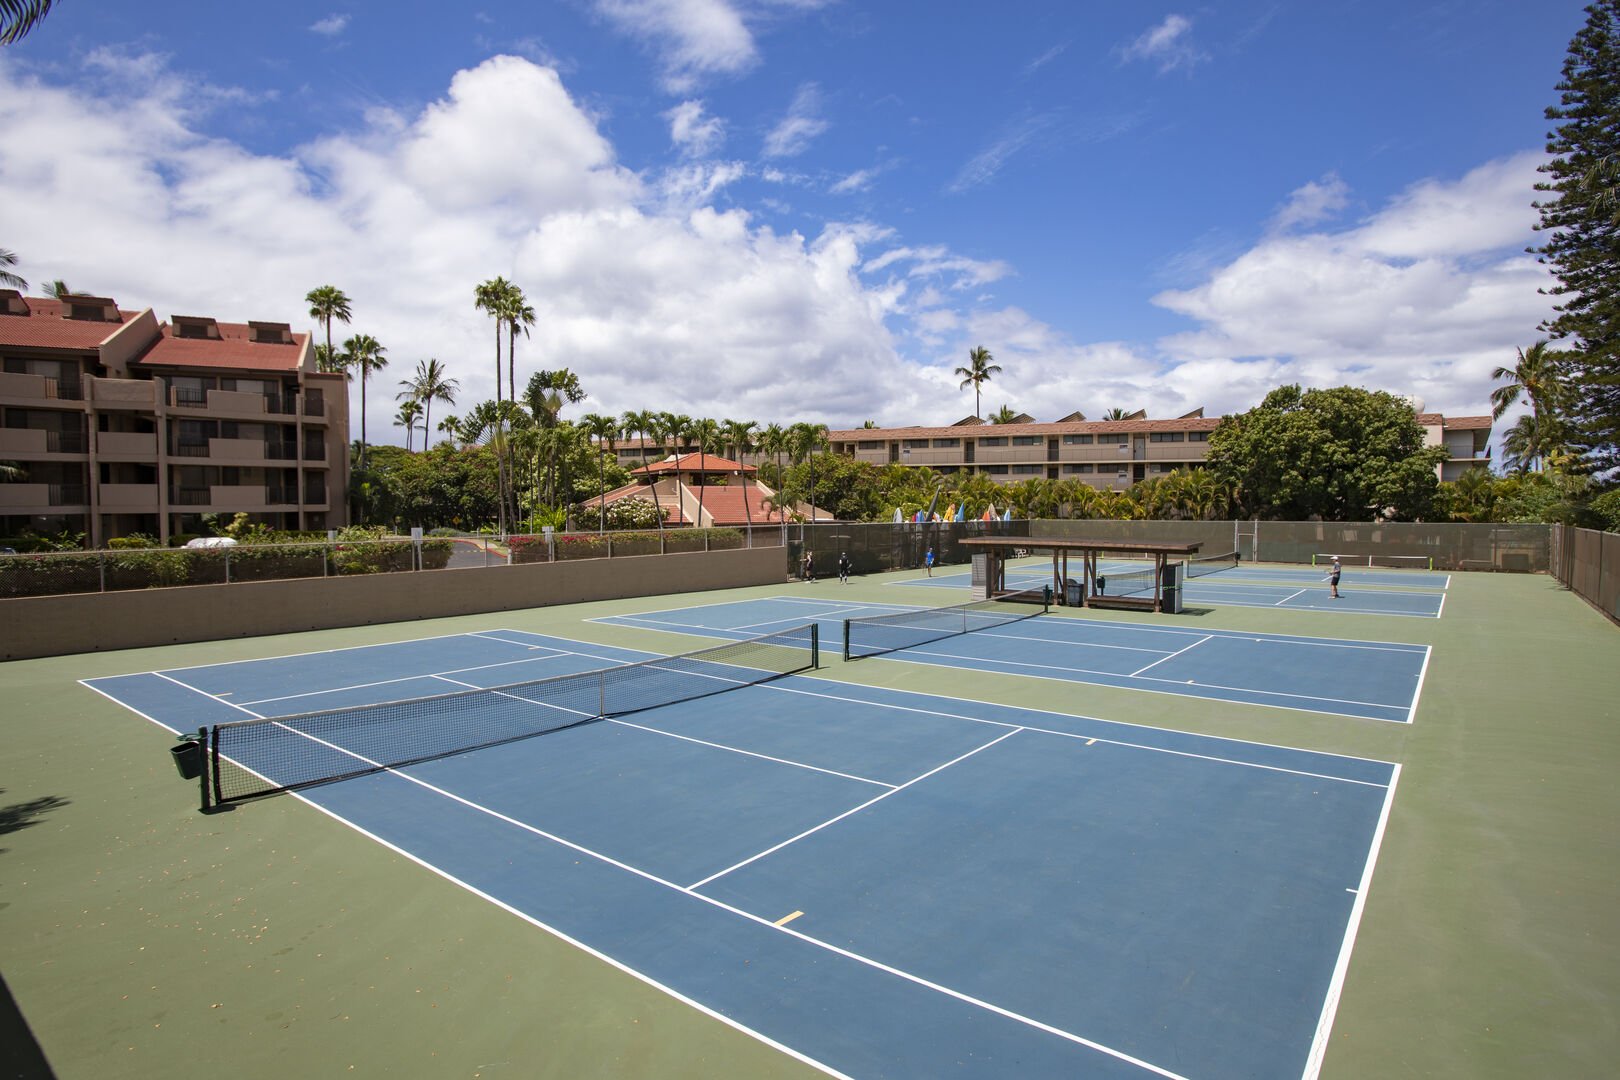 4 Tennis courts